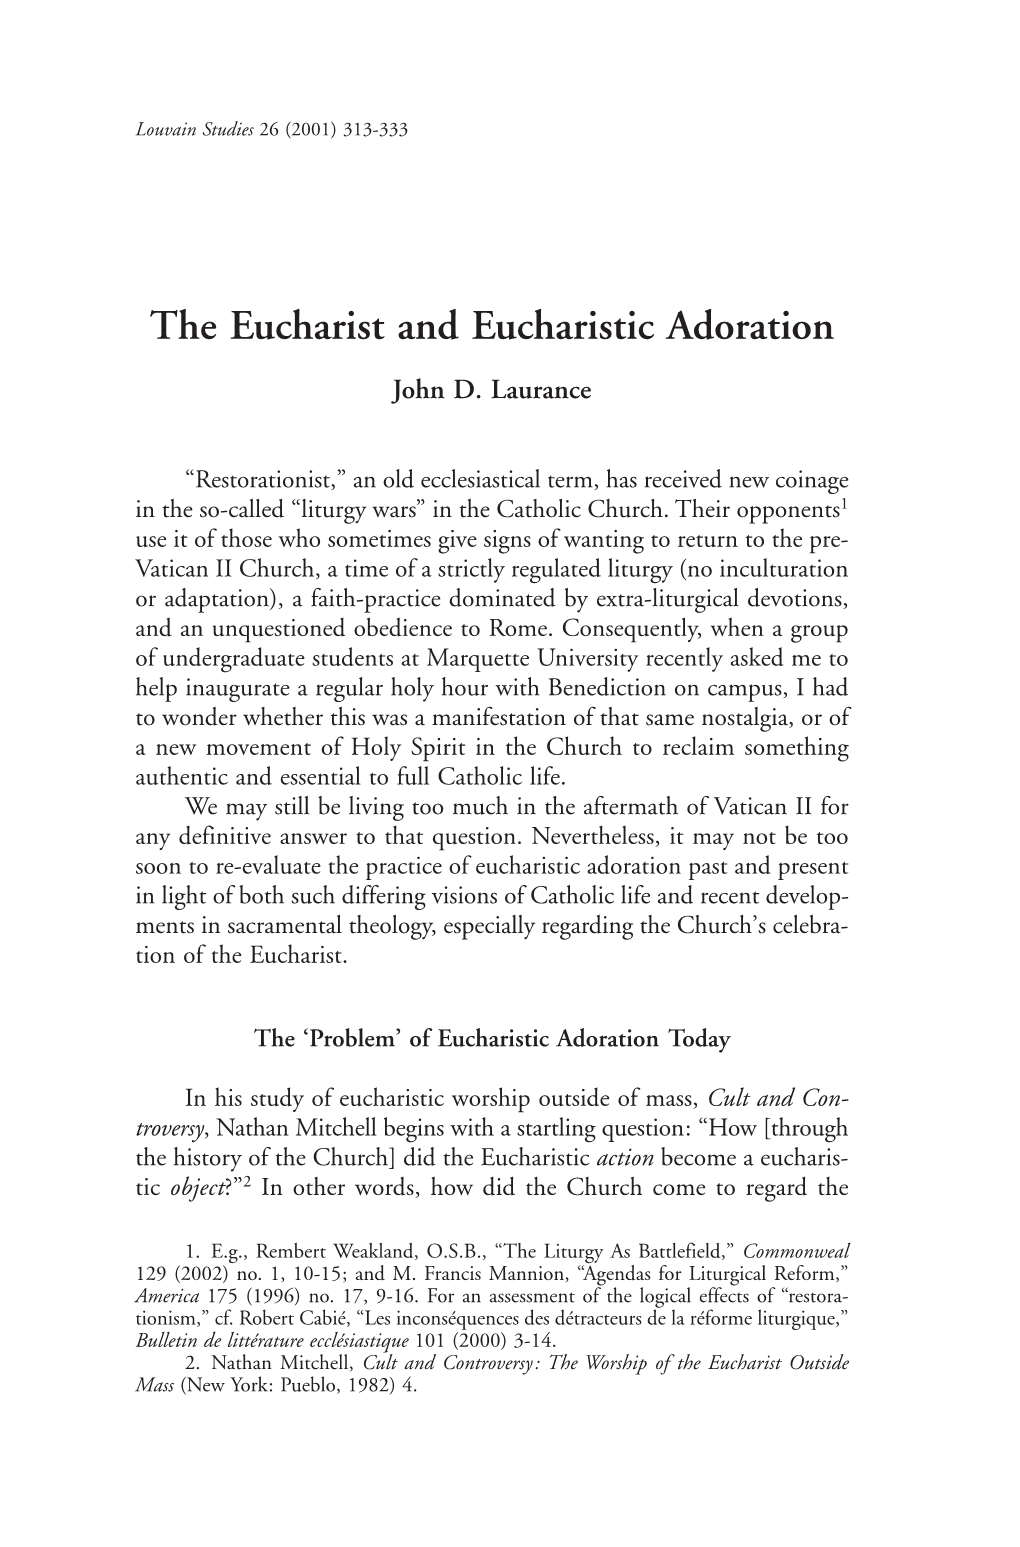 The Eucharist and Eucharistic Adoration John D